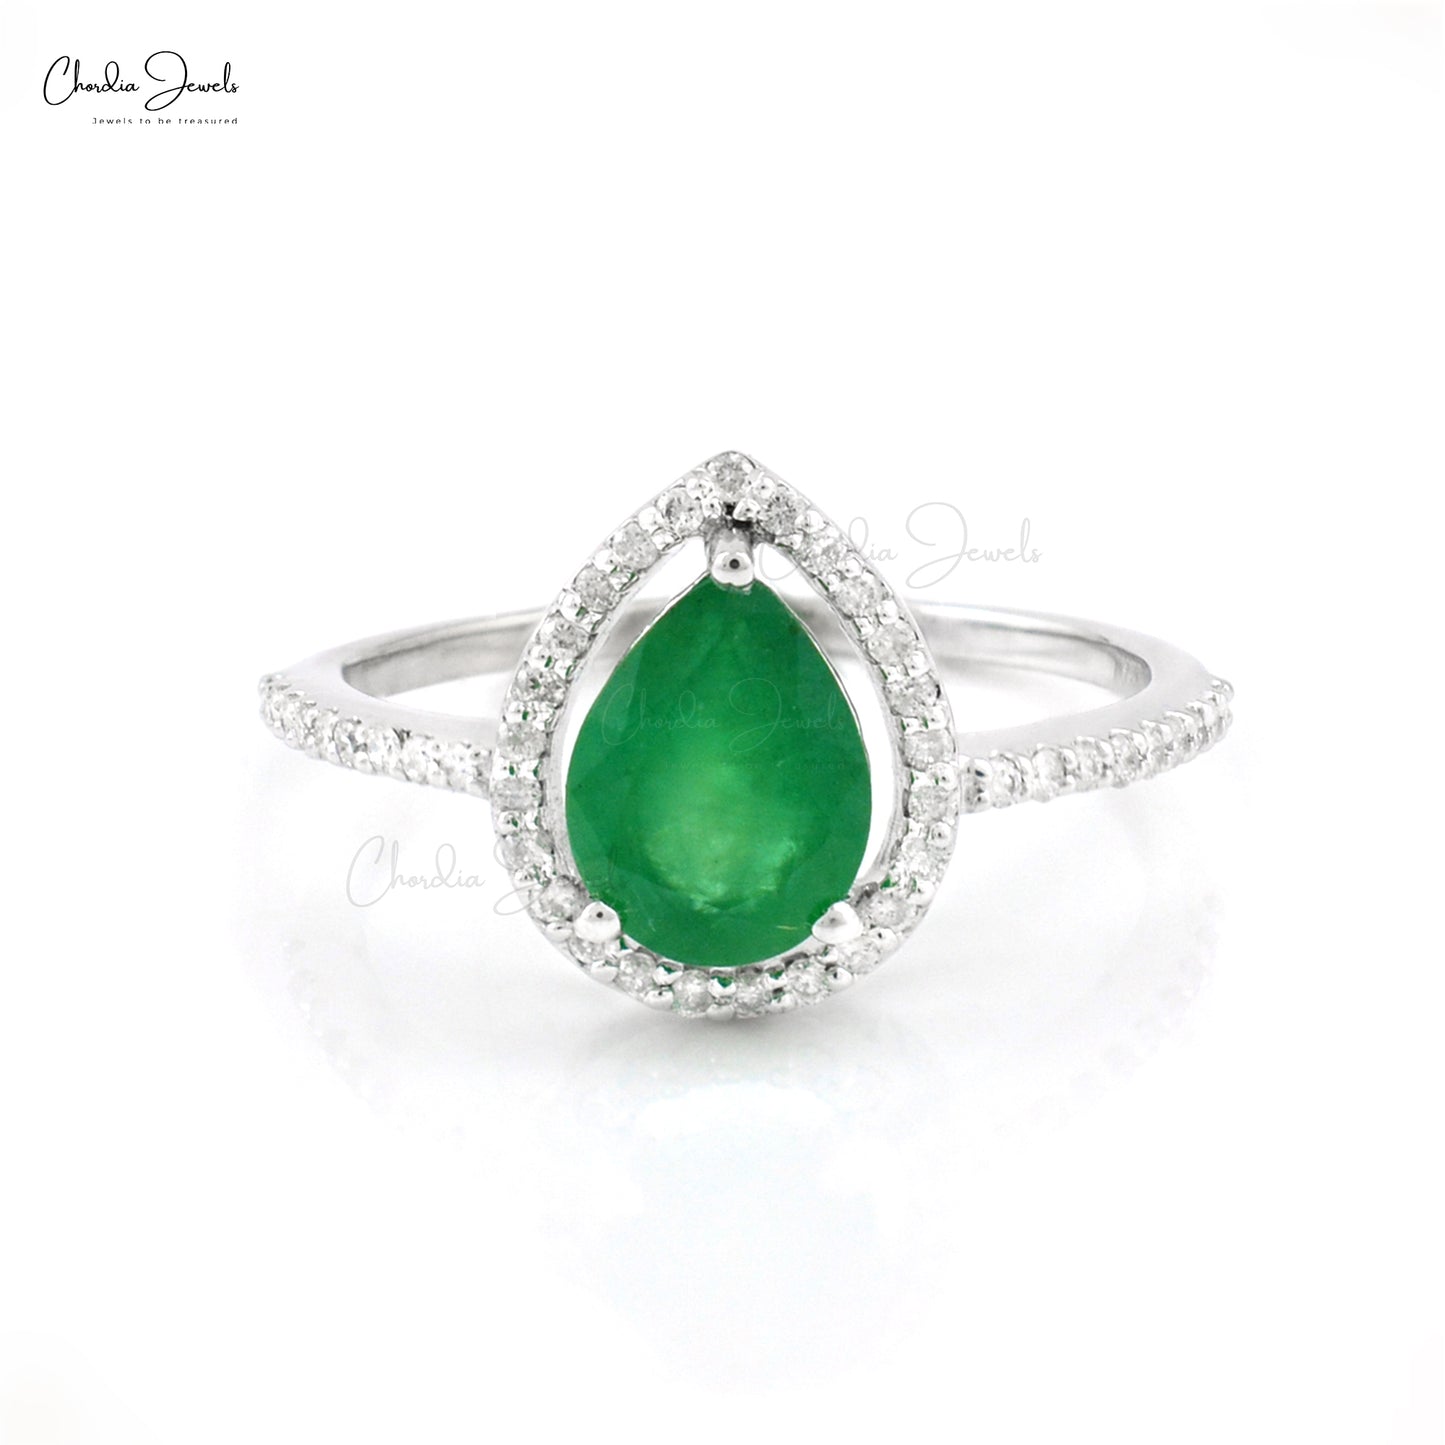 Natural Zambia Emerald Solitaire Halo Ring